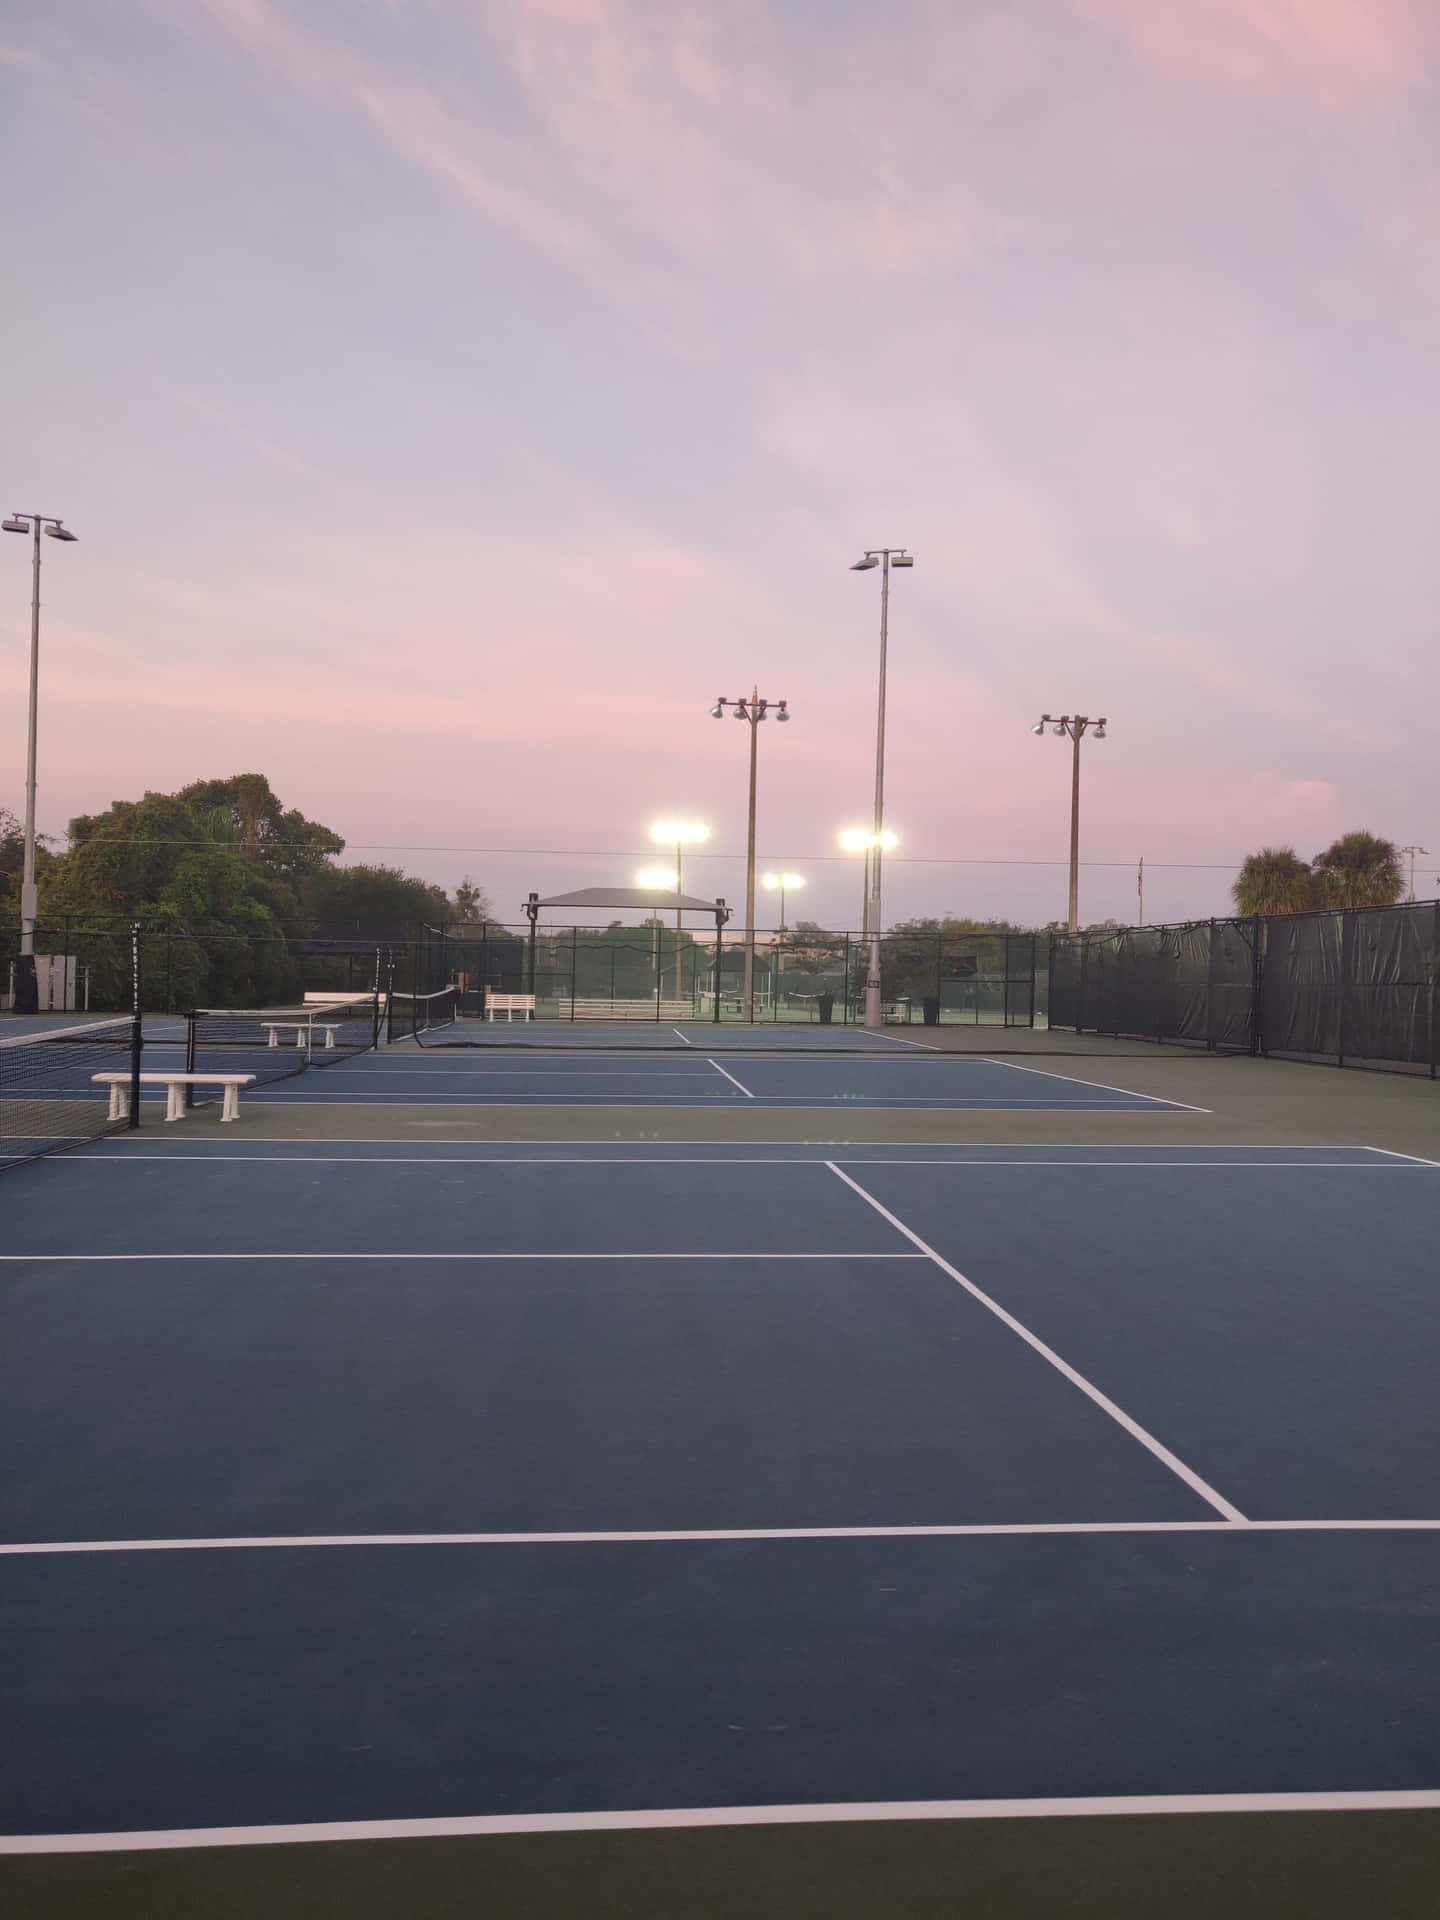 Twilight Tennis Courts.jpg Wallpaper